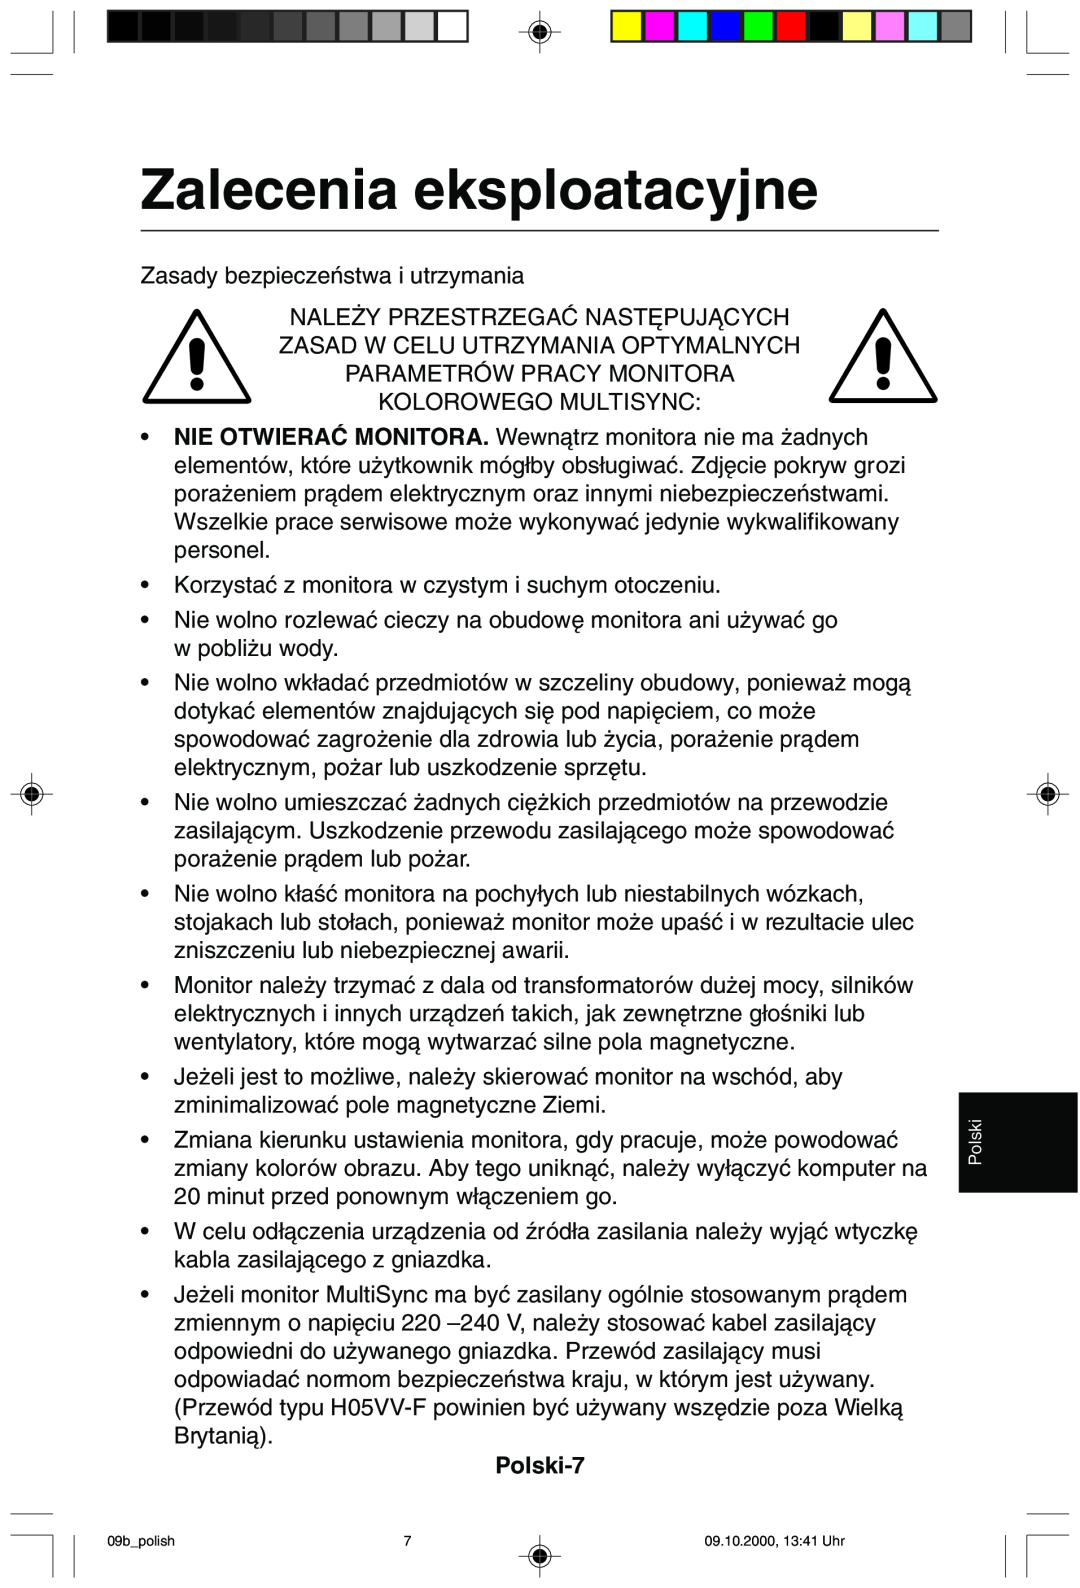 NEC 95F user manual Zalecenia eksploatacyjne, Polski-7 